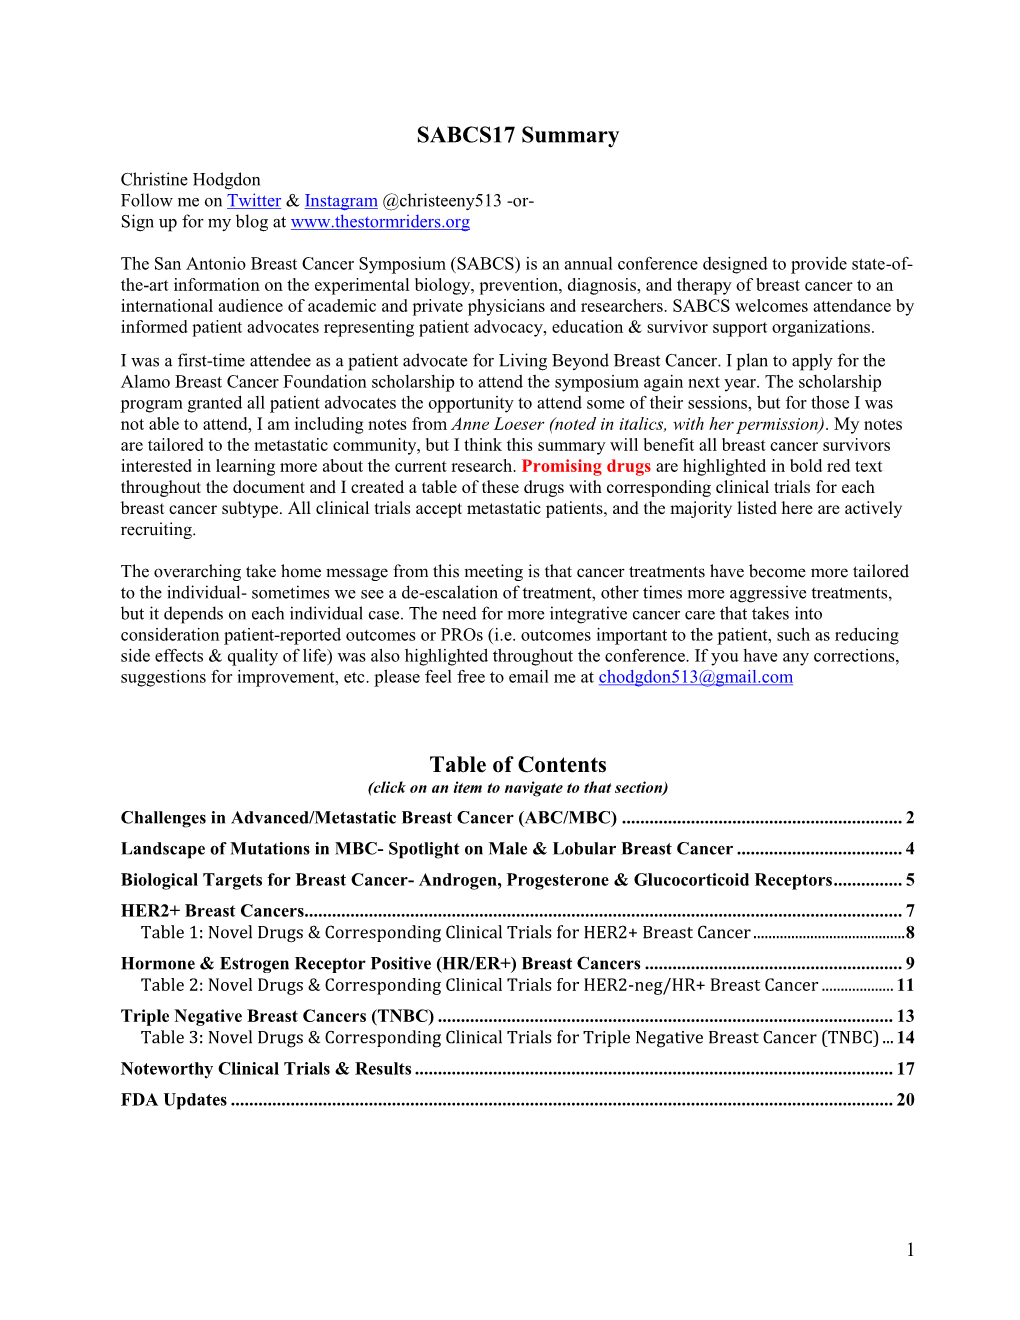 PDF Version of SABCS17 Highlights